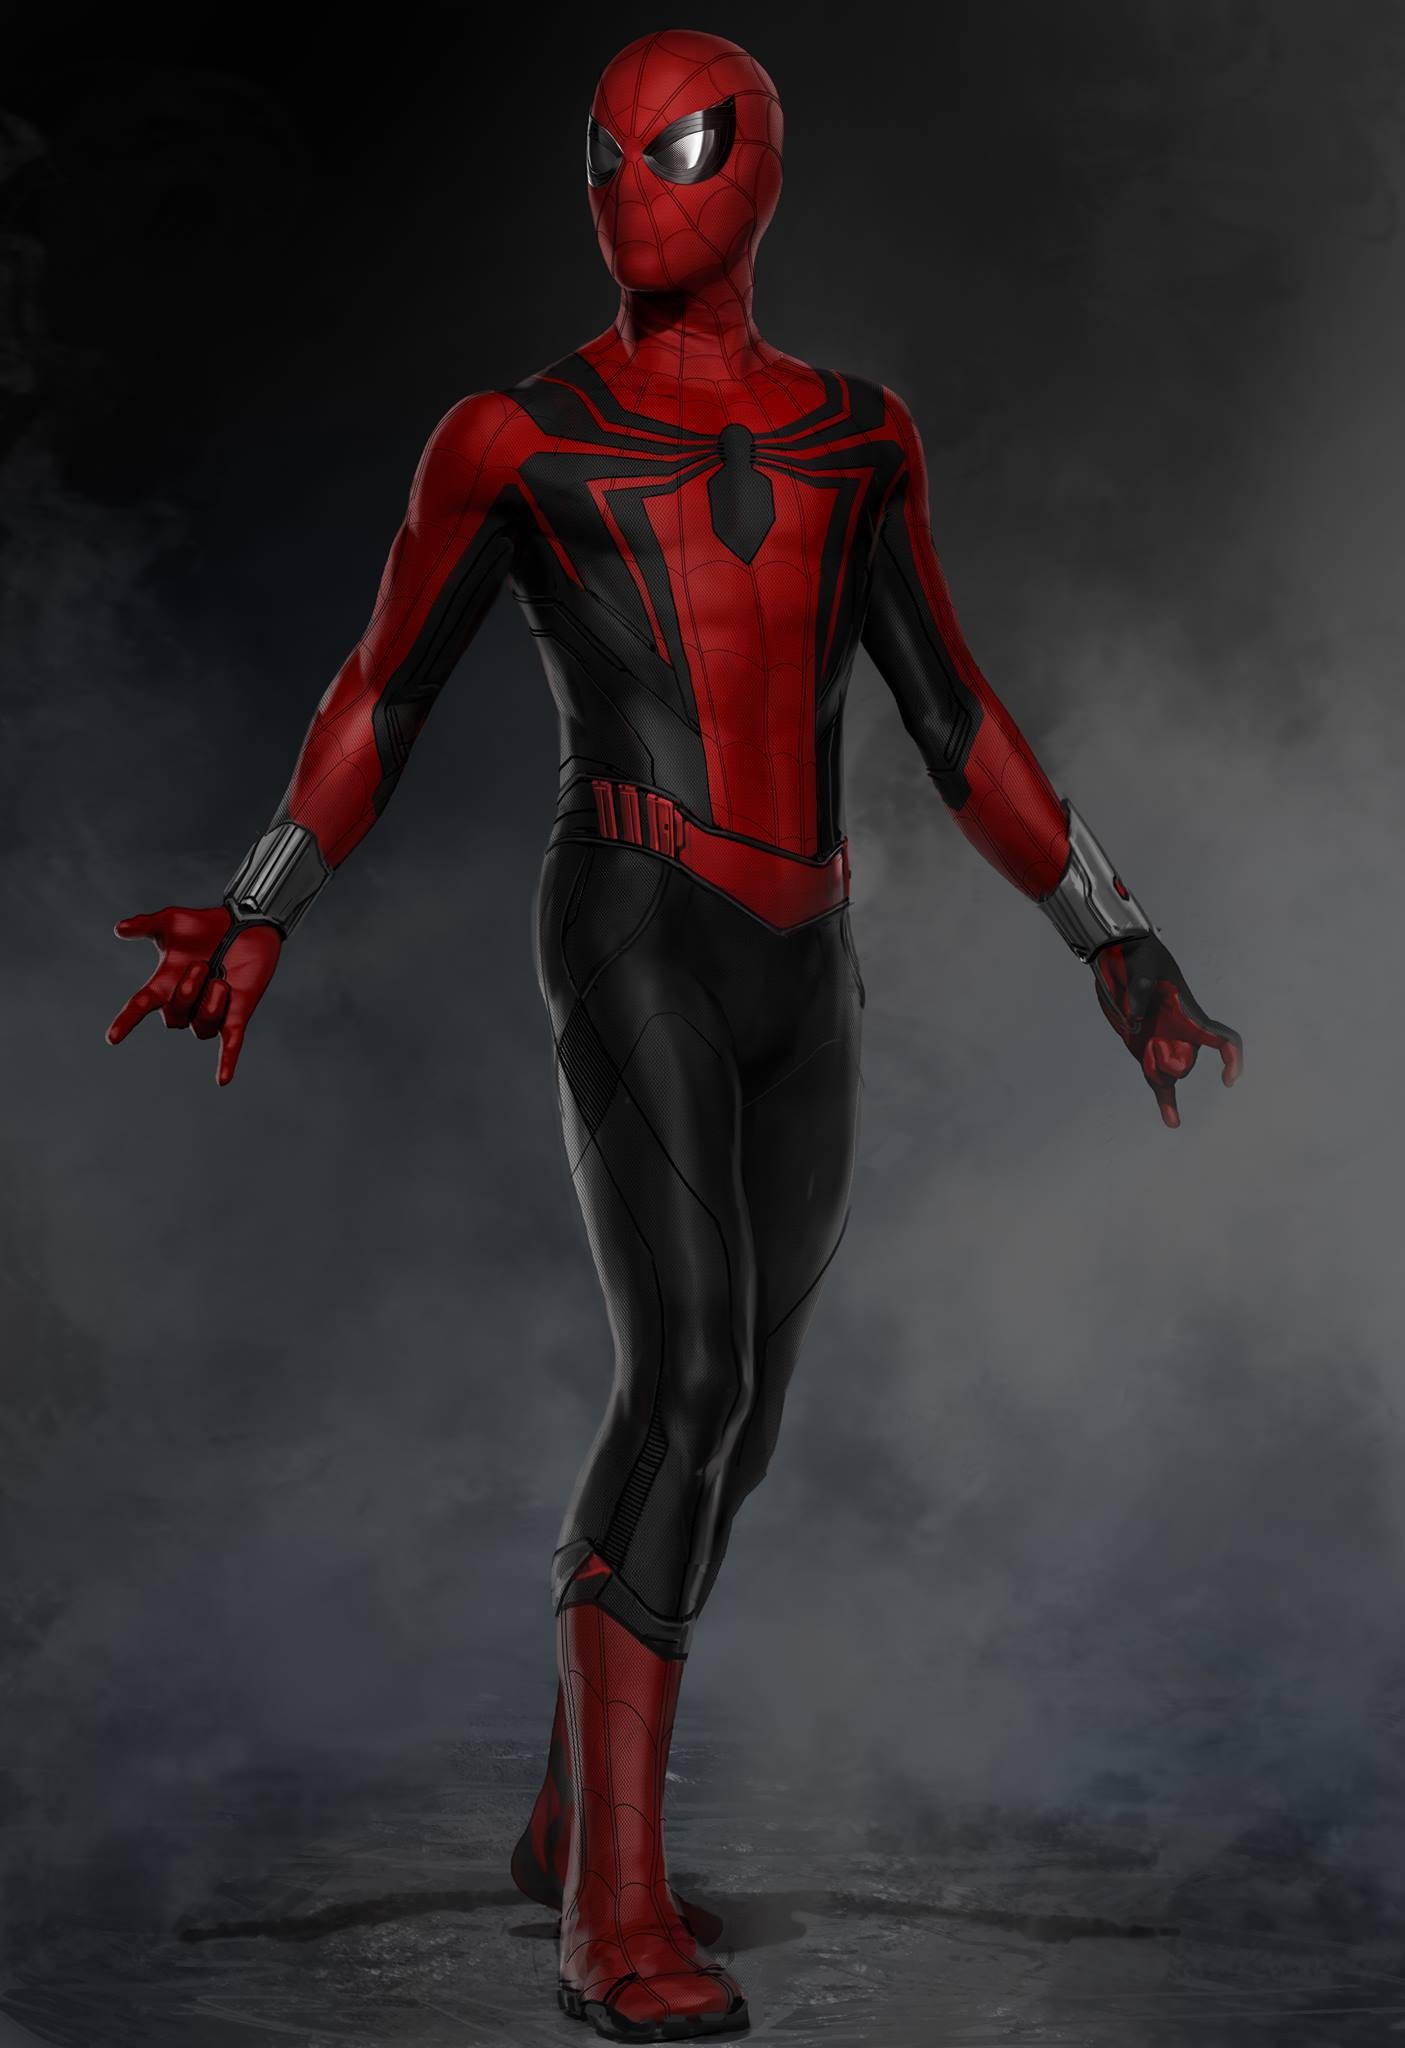 Ryan Meinerding - Design Passes for Spider-Man: Homecoming Suit